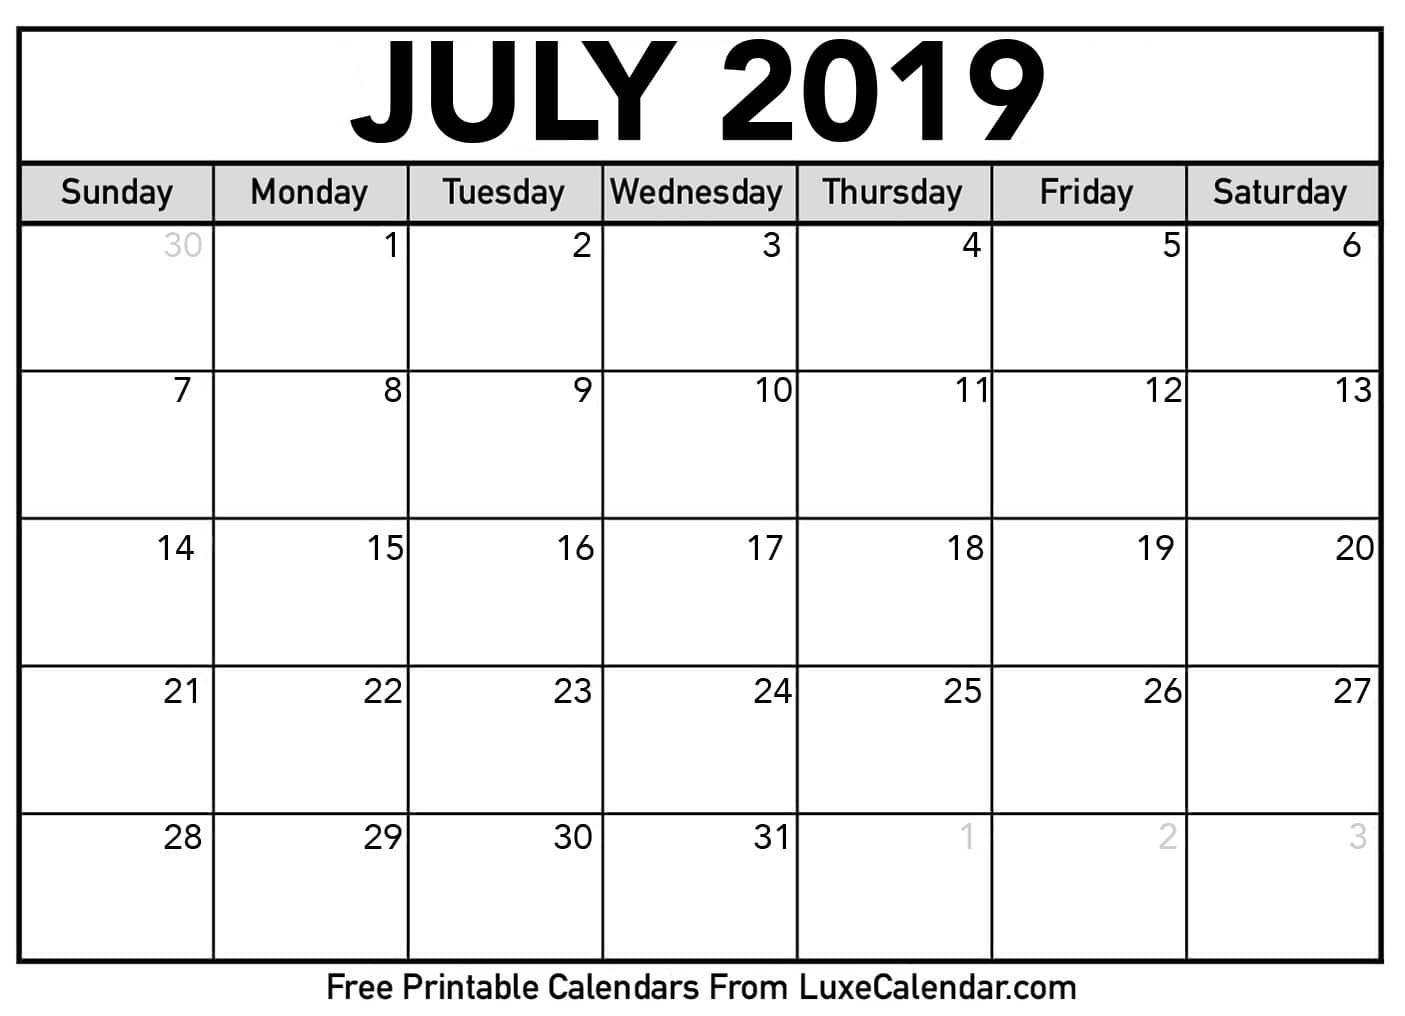 July 2019 Printable Calendars - Luxe Calendar Calendar Month July 1960